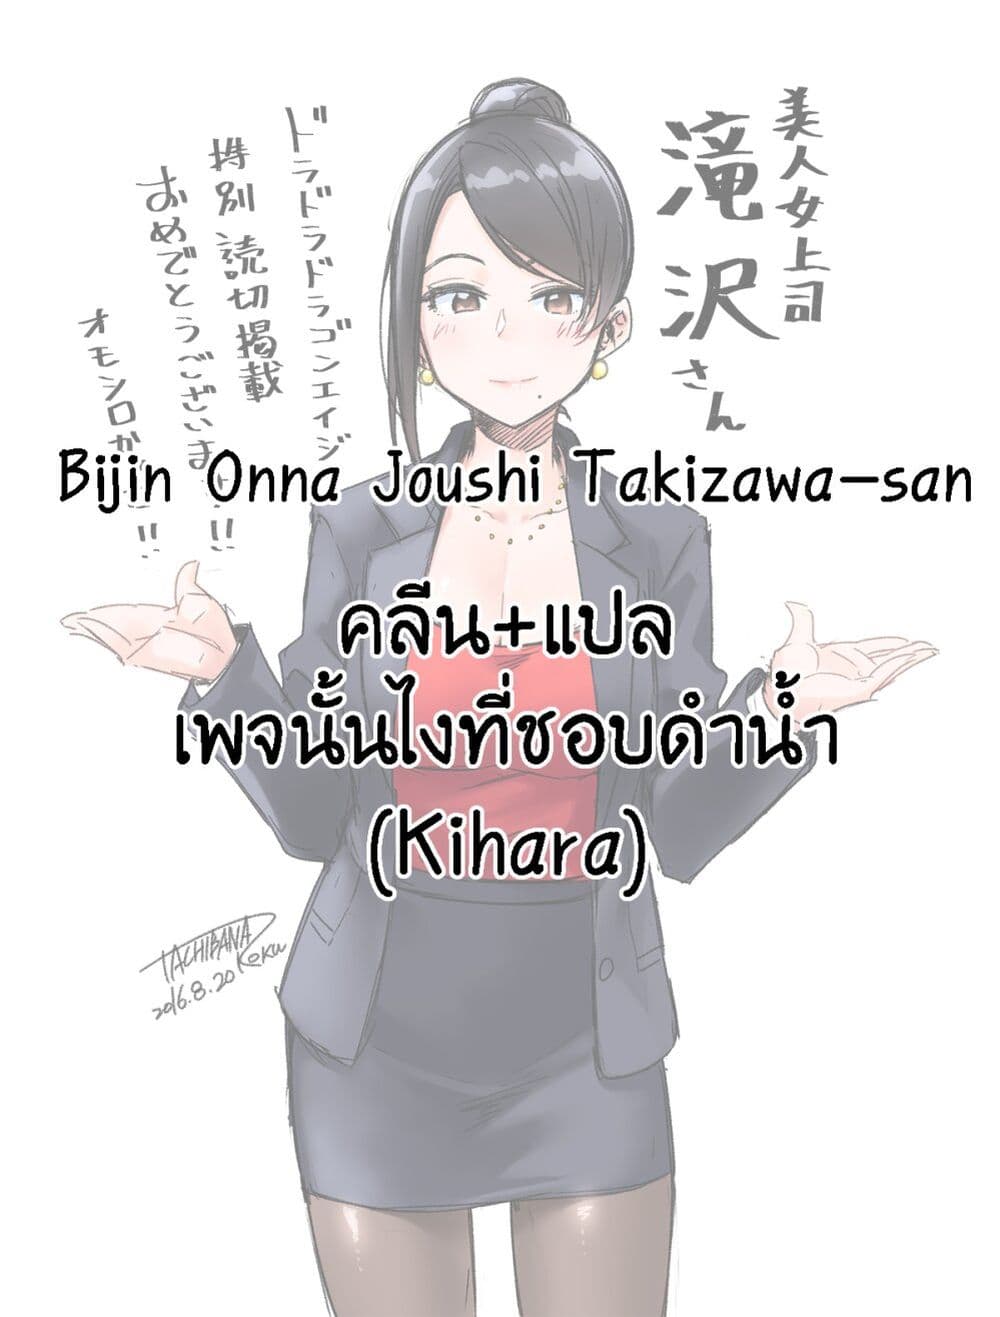 Bijin Onna Joushi Takizawa-san หัวหน้าสุดสวย ทากิซาวะซัง 10-10